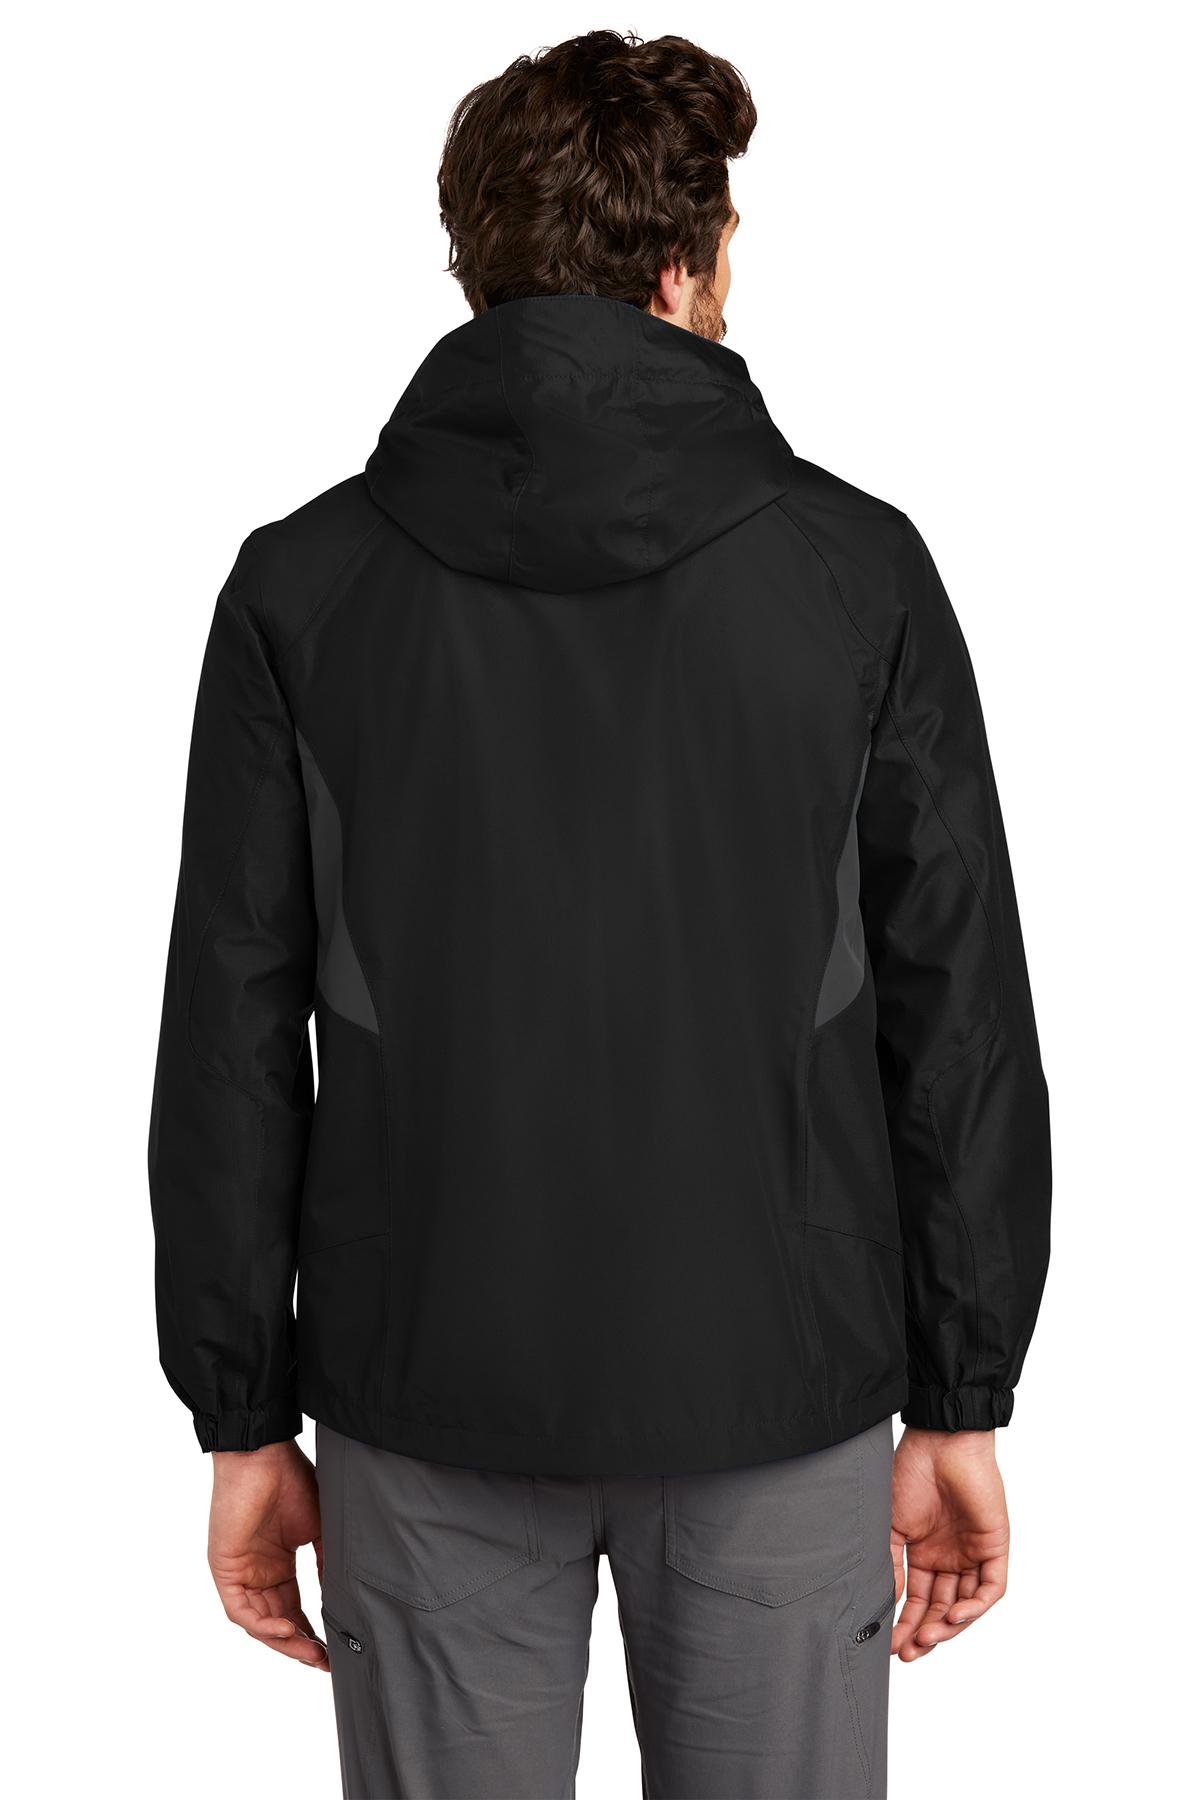 Eddie Bauer - Rain Jacket | Product | Company Casuals